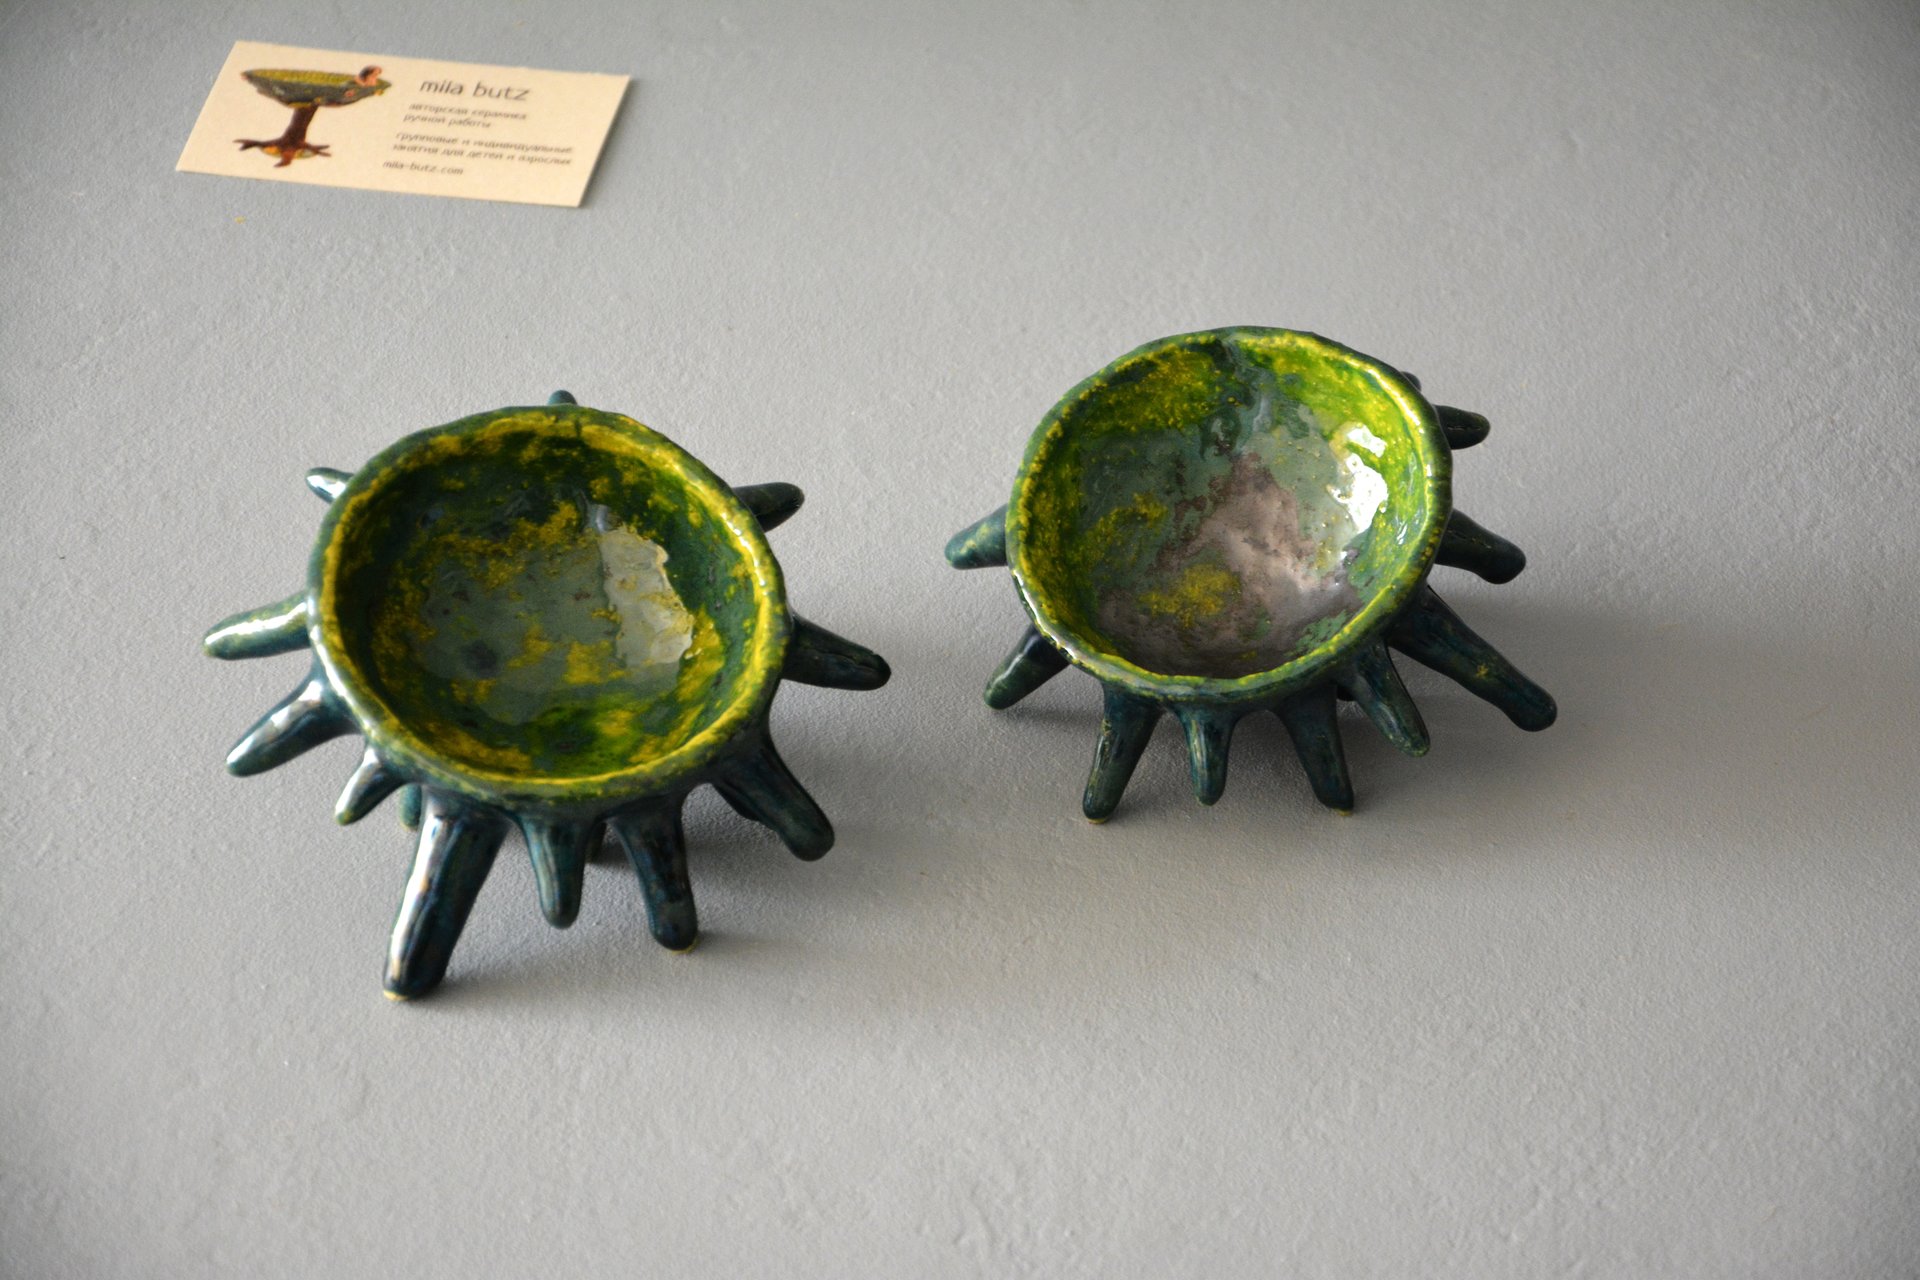 Spikes - Ceramic Candl-holders, diameter - 10 cm, photo 1 of 7.